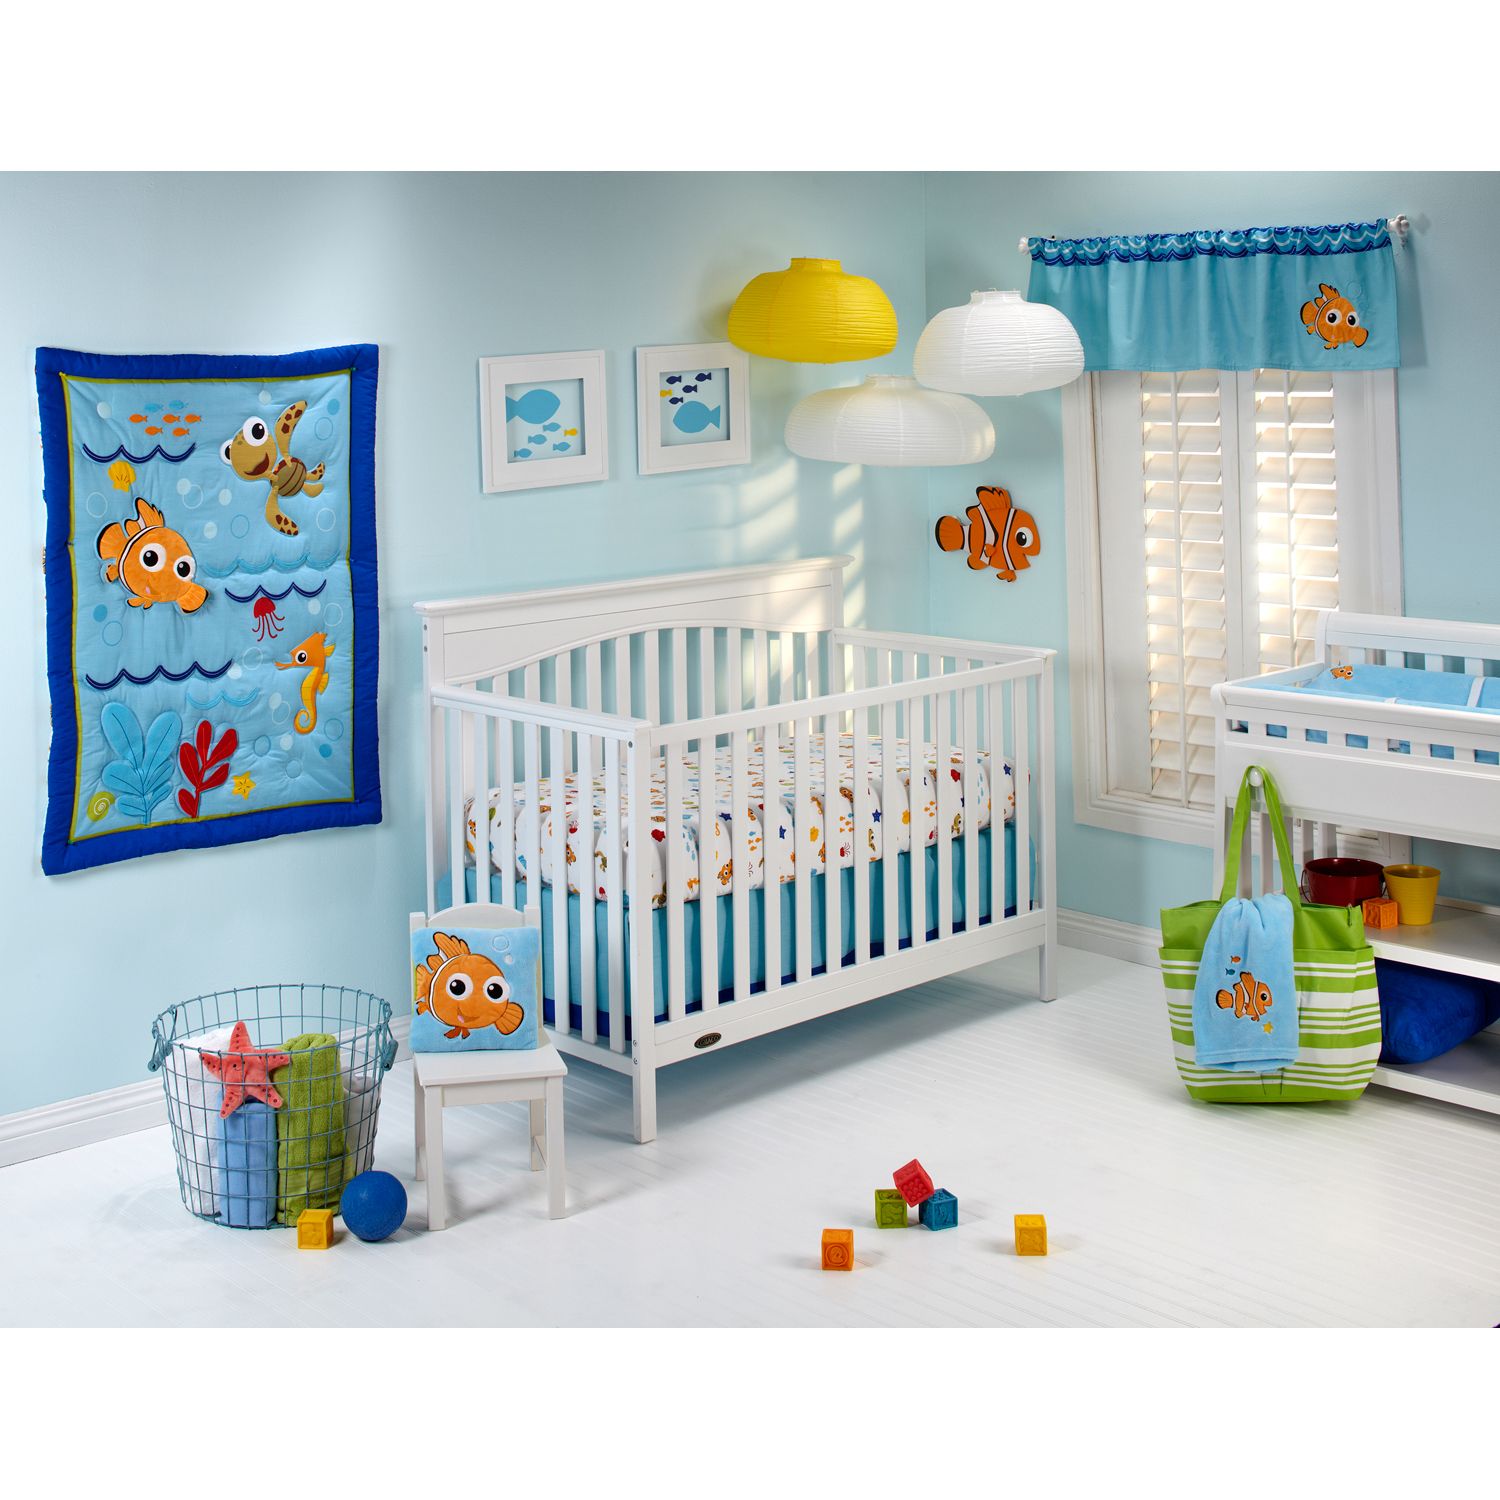 Finding Nemo 17 Piece Crib Bedding Full Set by Disney Baby 